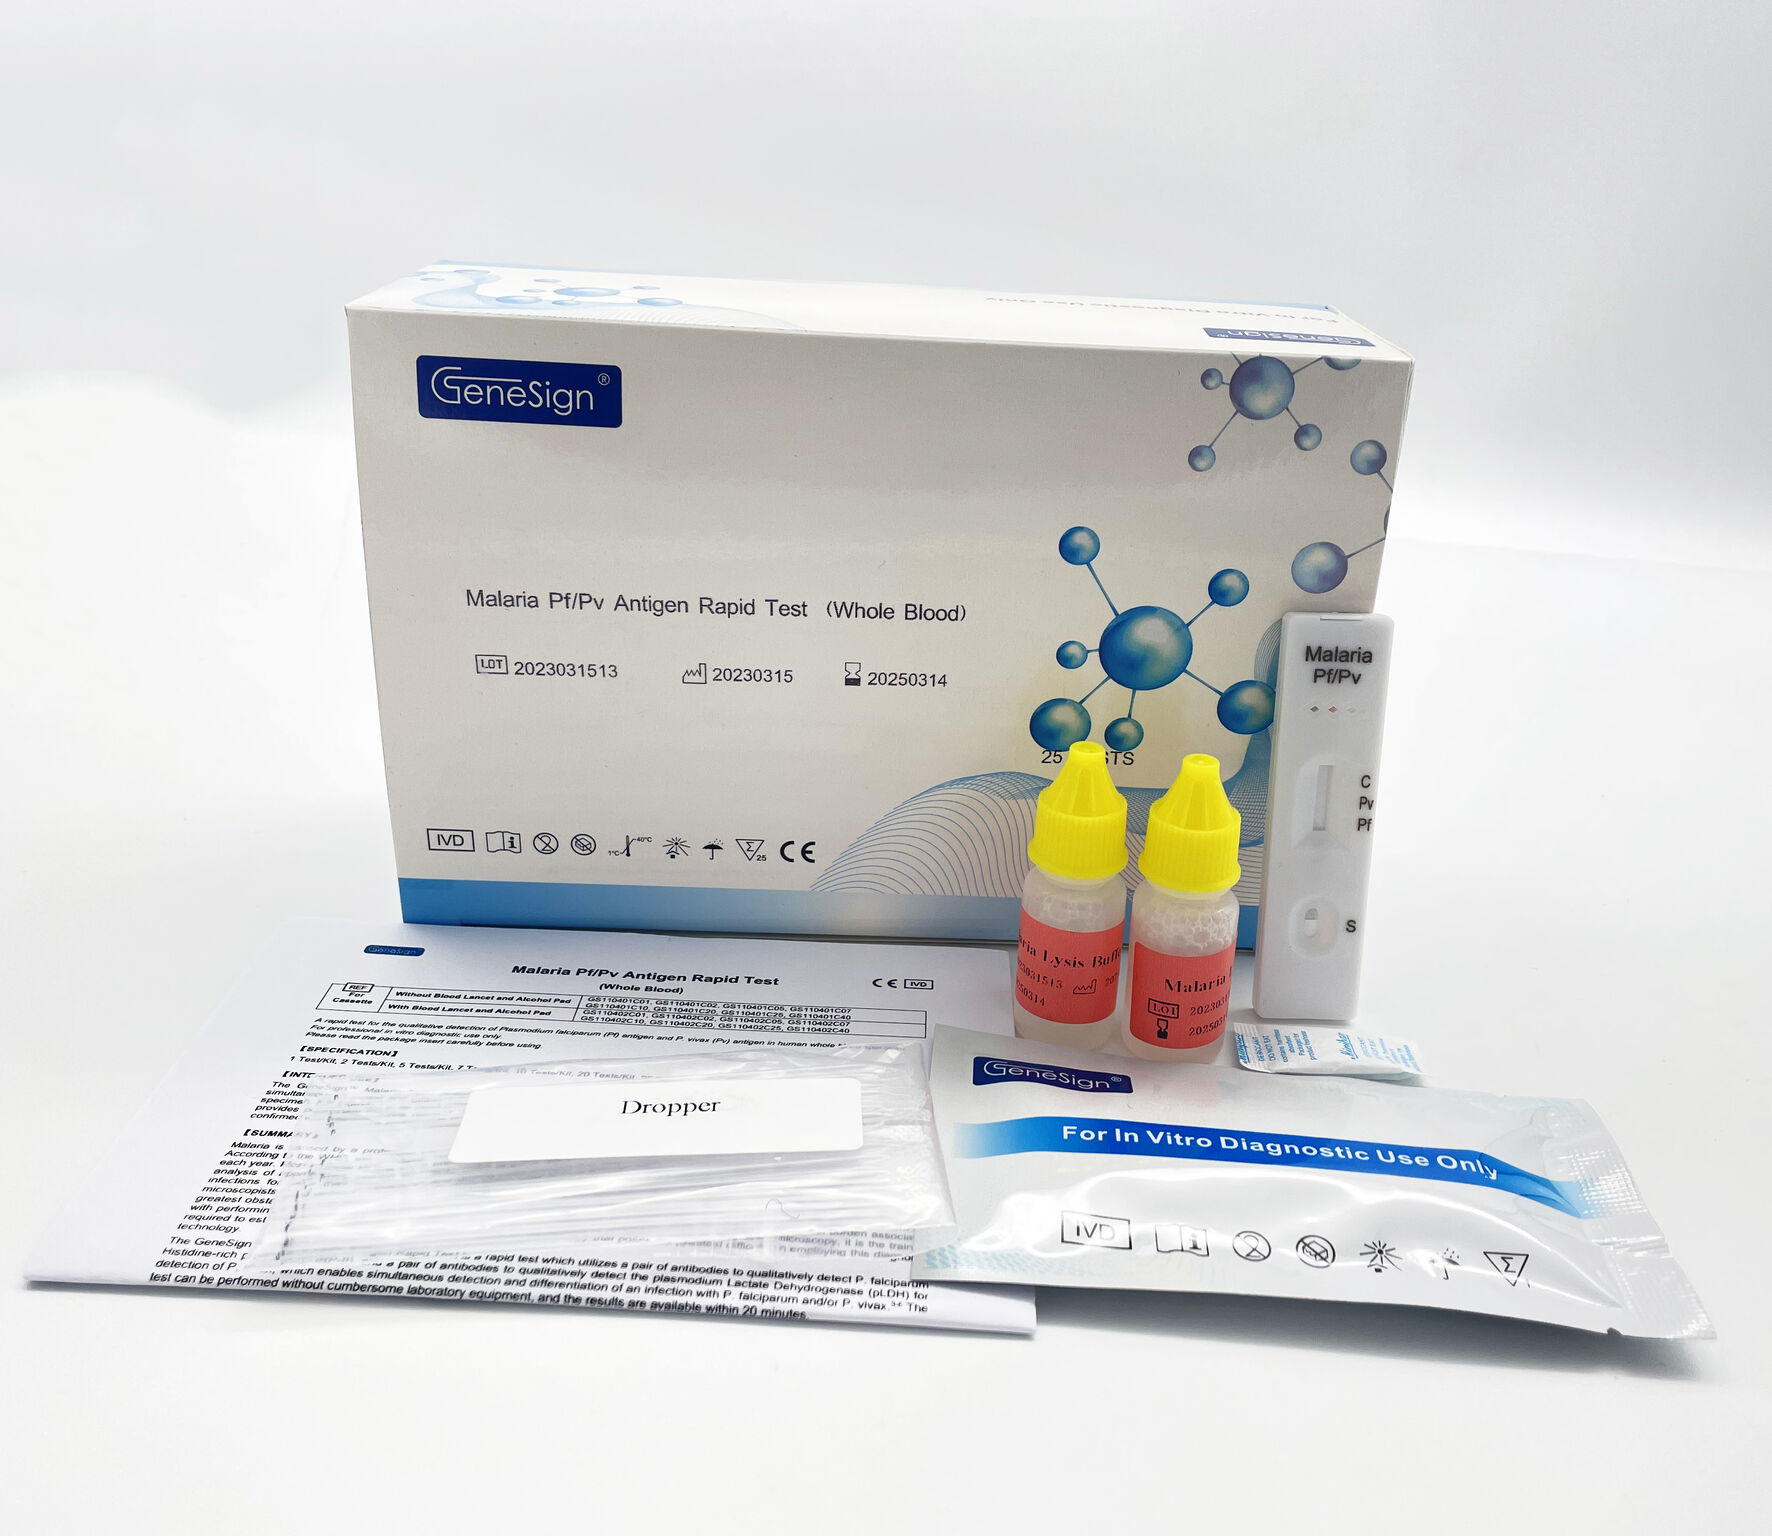 Genesign Malaria Pf/Pv Antigen Rapid Test